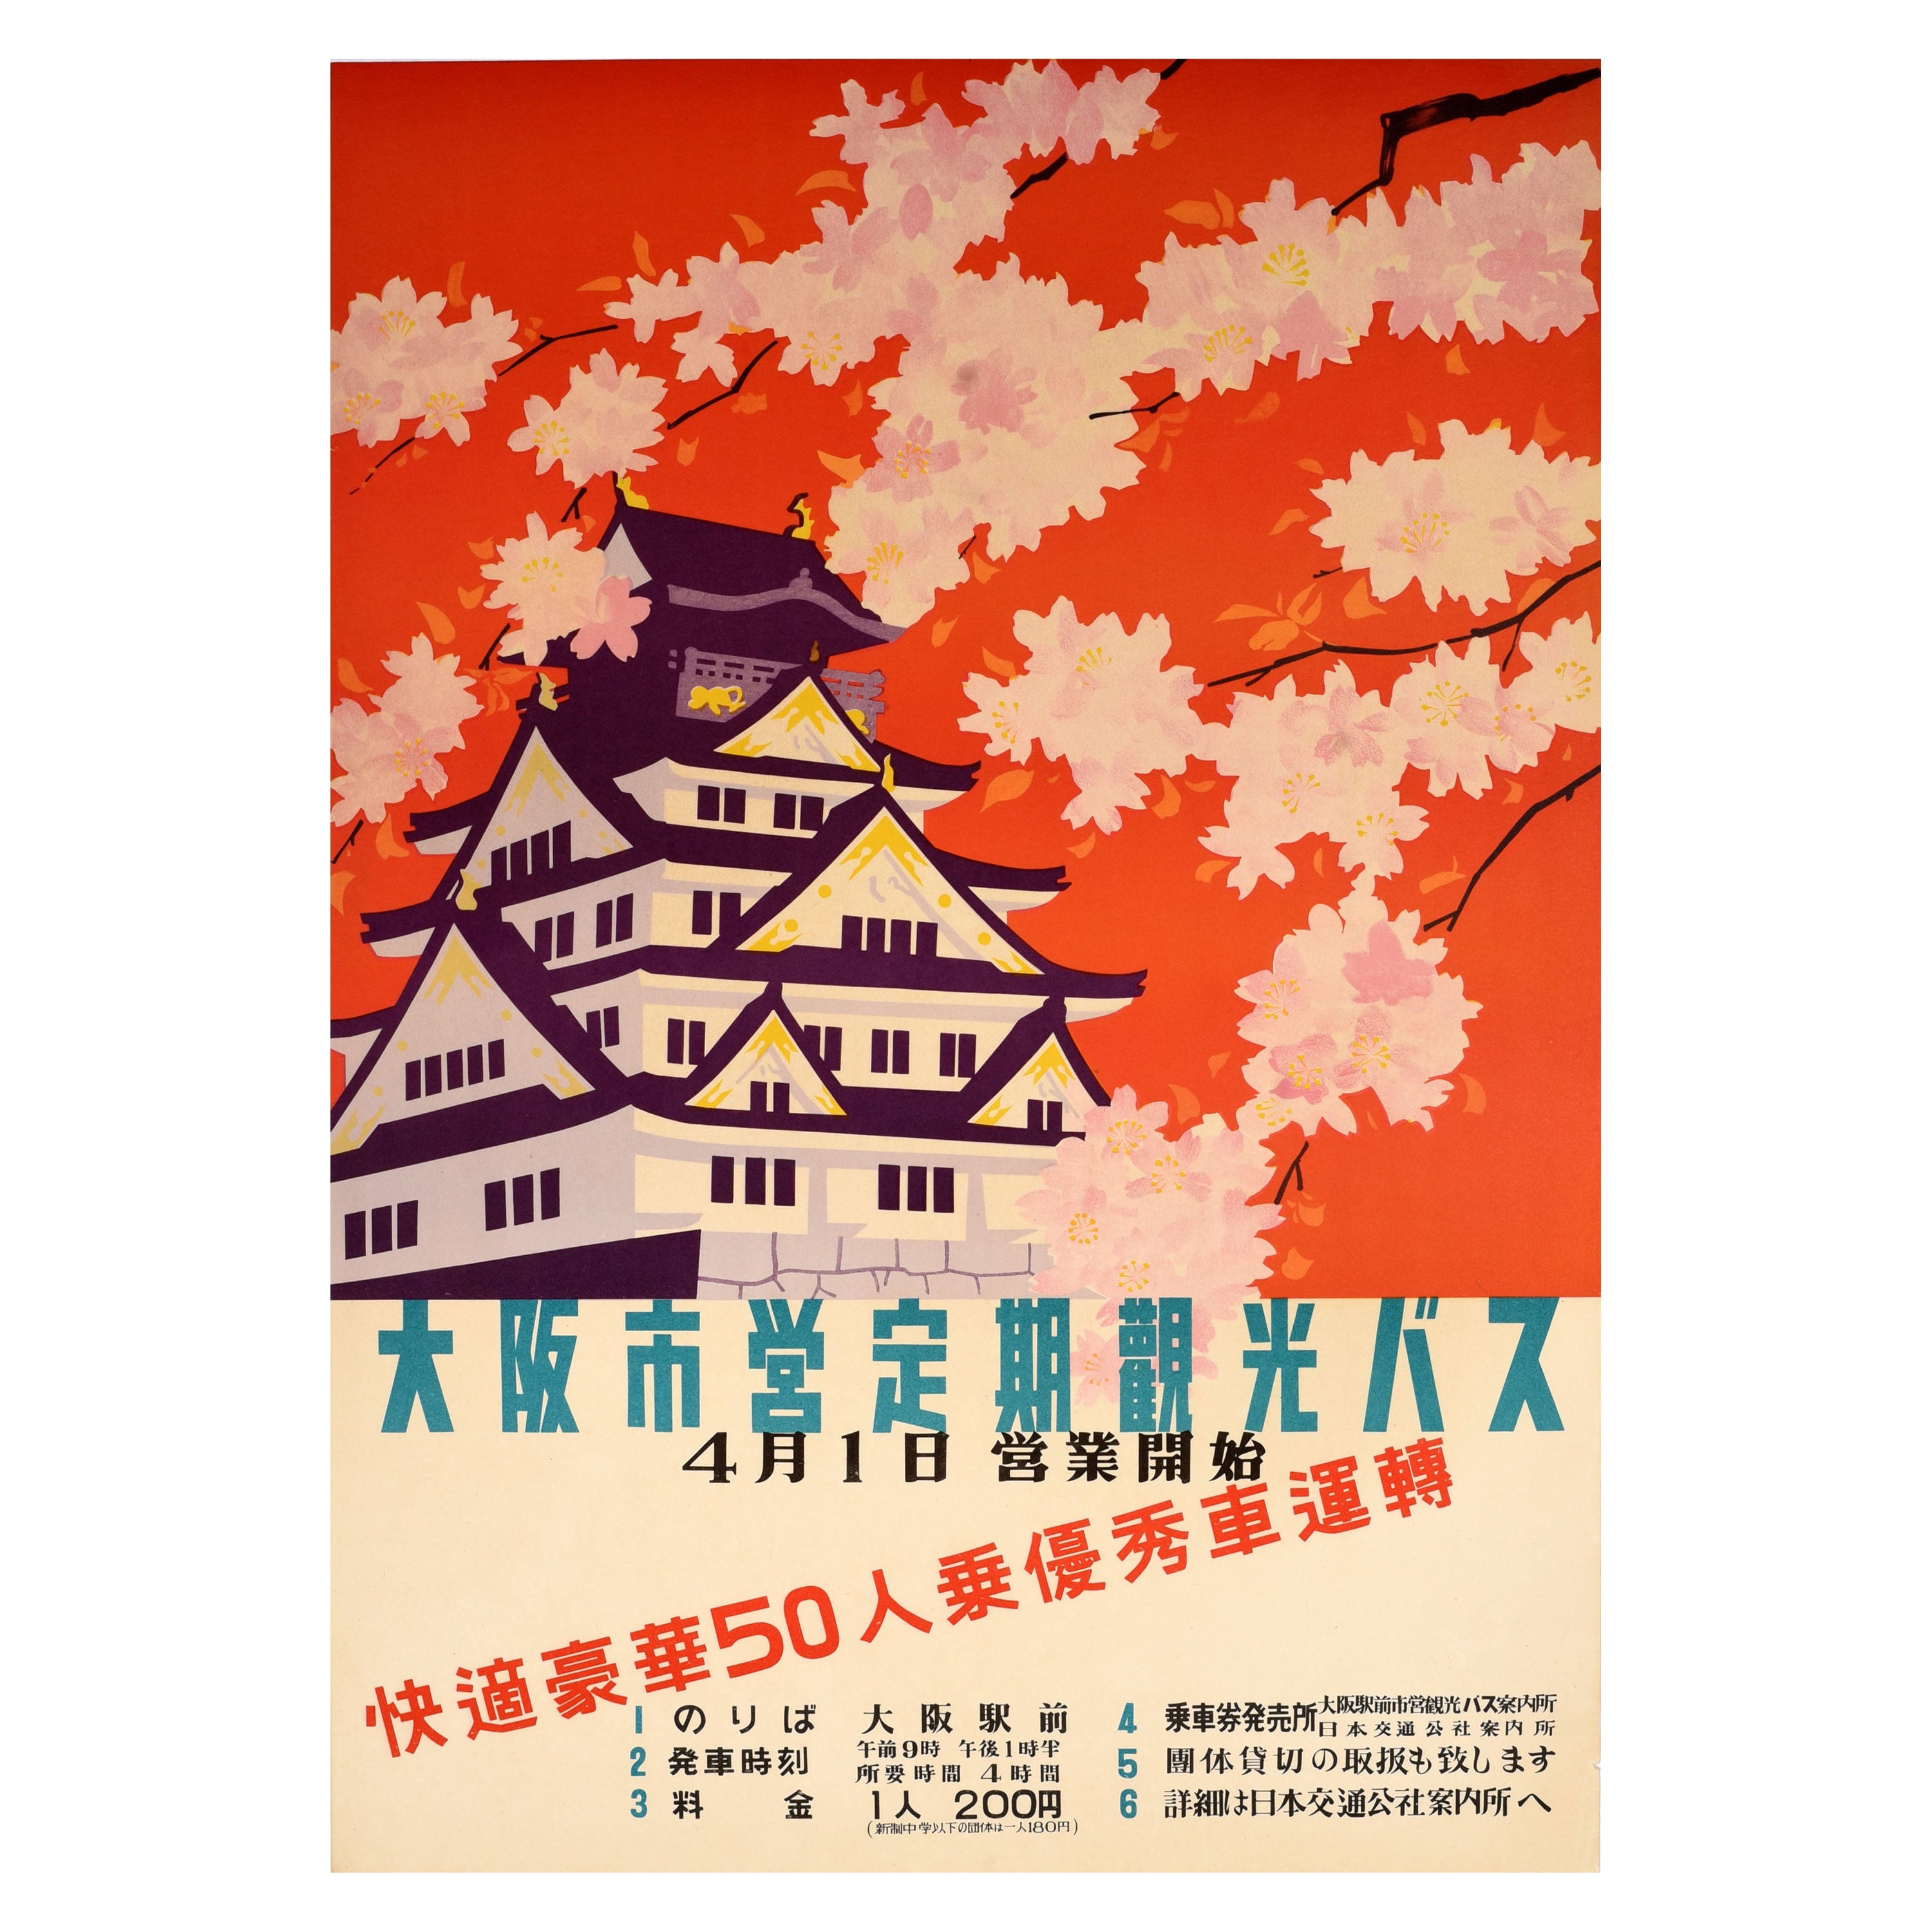 Original Vintage Asiatisches Reiseplakat, Osaka, Schloss, Japan, Busfahrten, Sakura, Kirsche